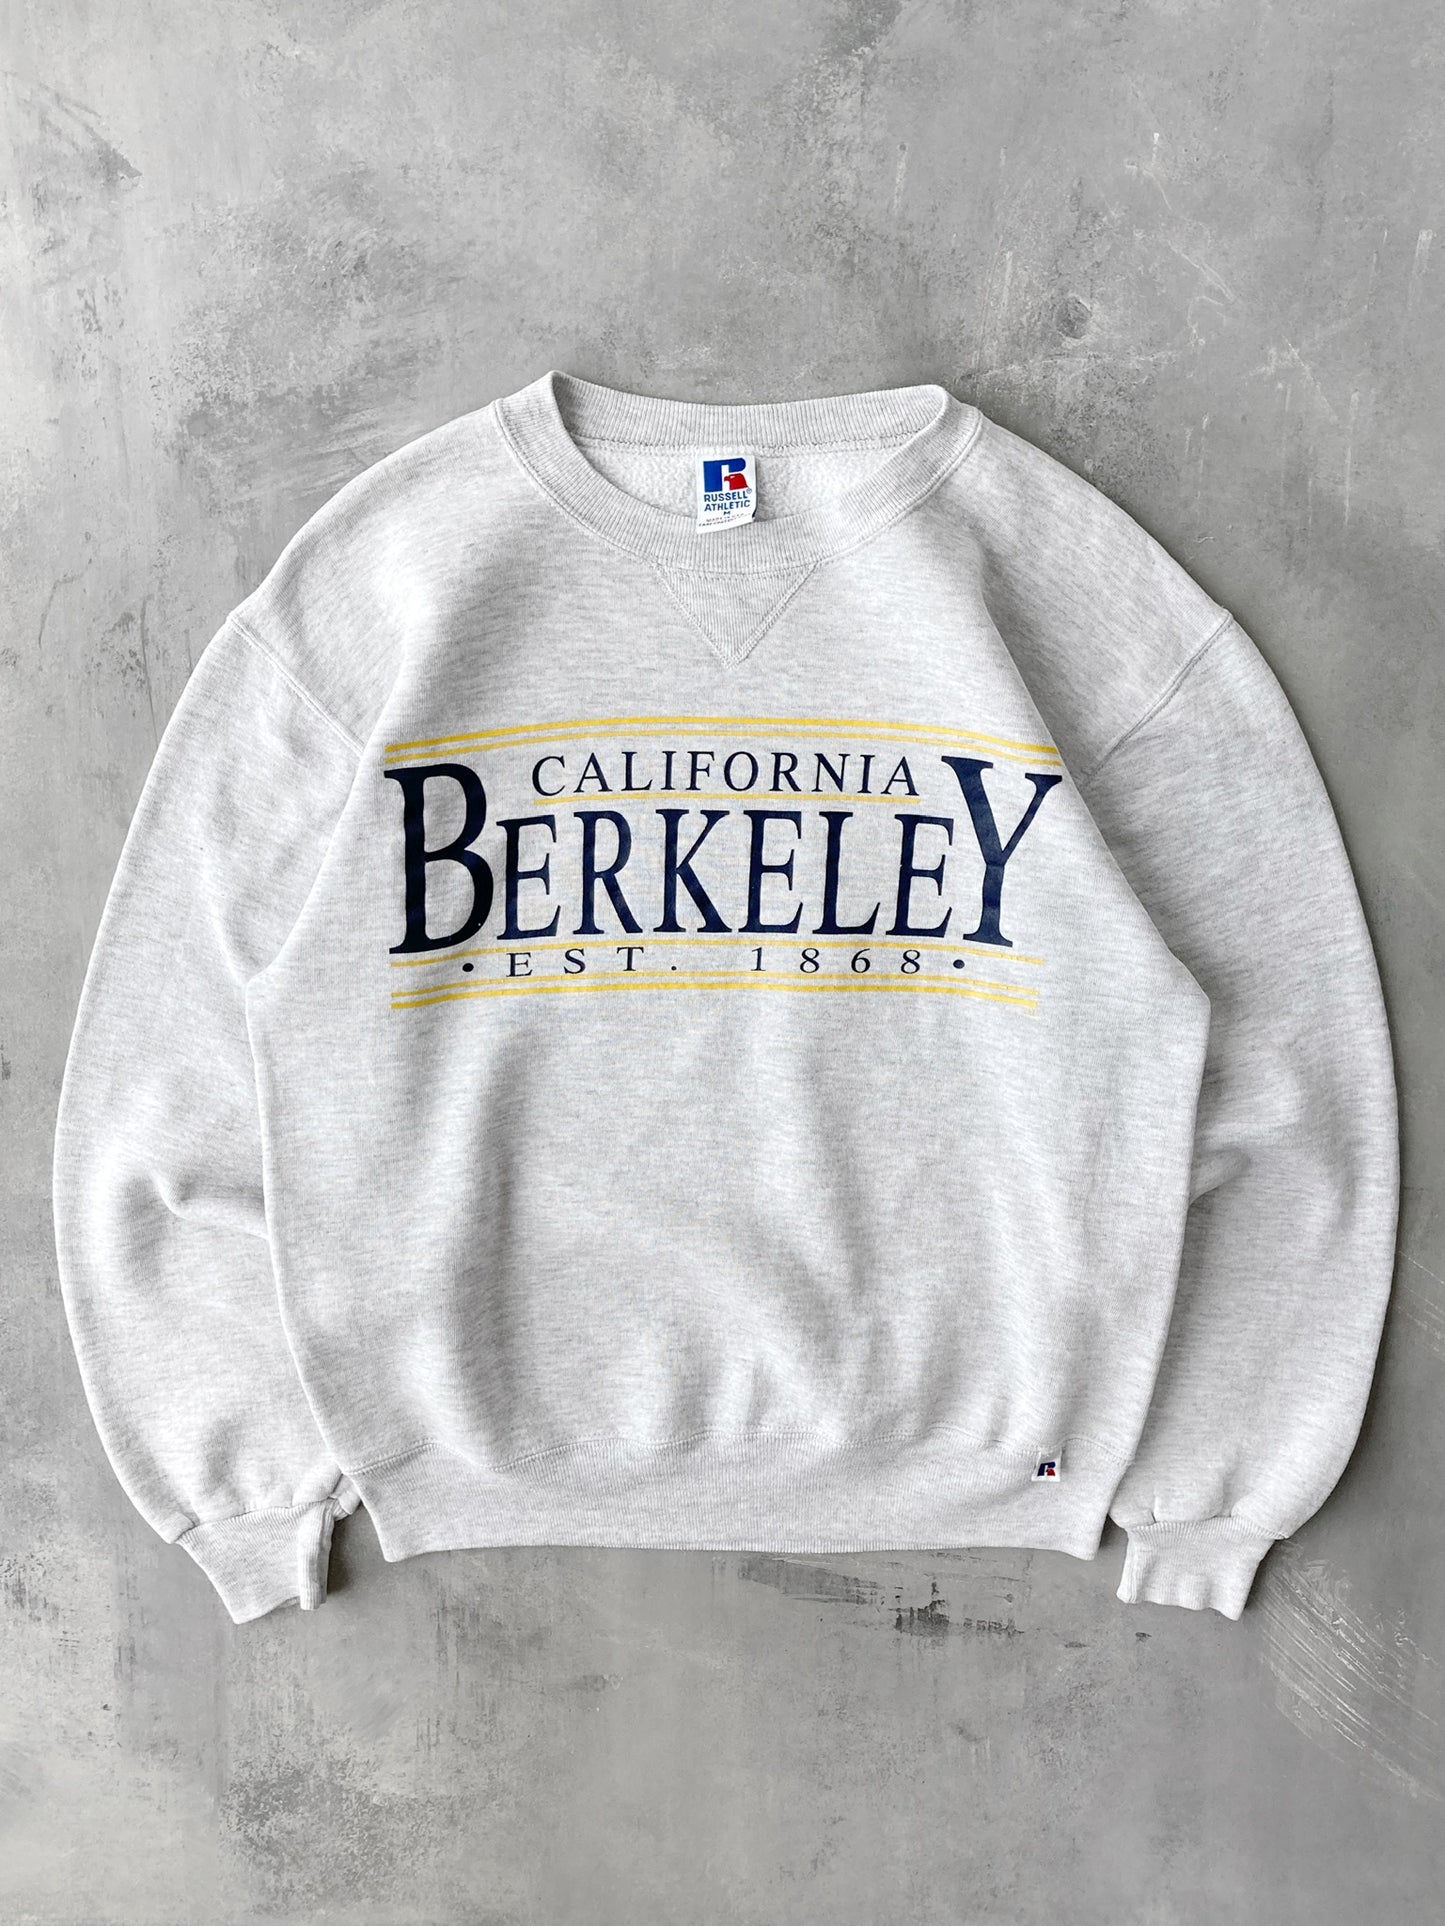 University of California Berkeley Crewneck 90's - Medium